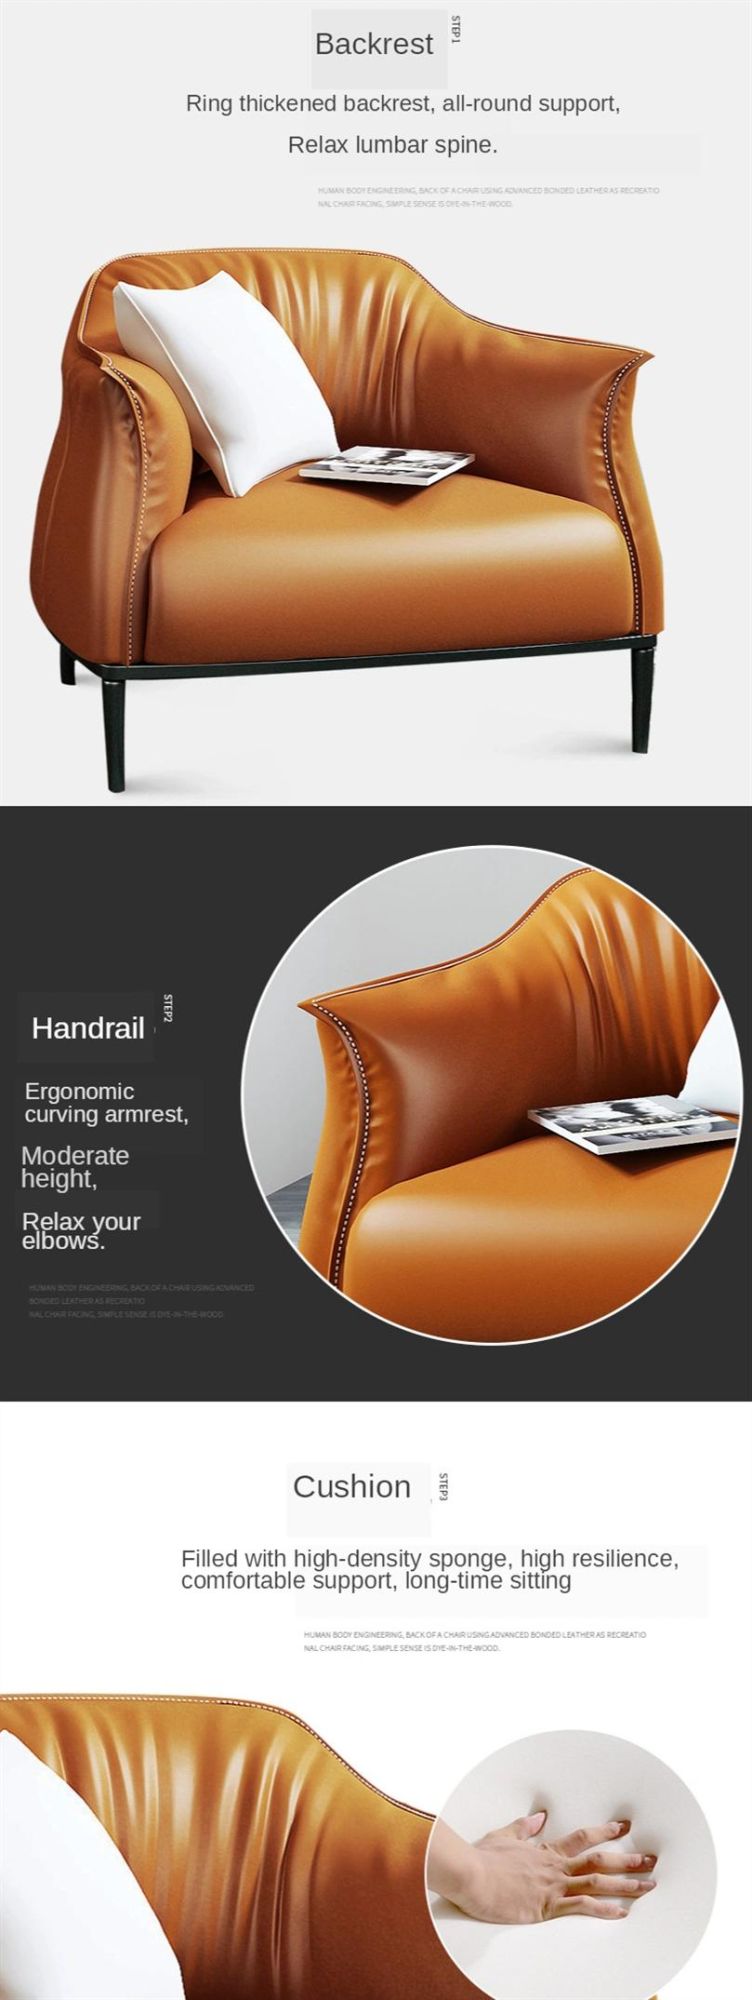 Hot Sale Nordic Leather Art Single Sofa Modern Minimalist Apartment Balcony Living Room Chaise Lounge